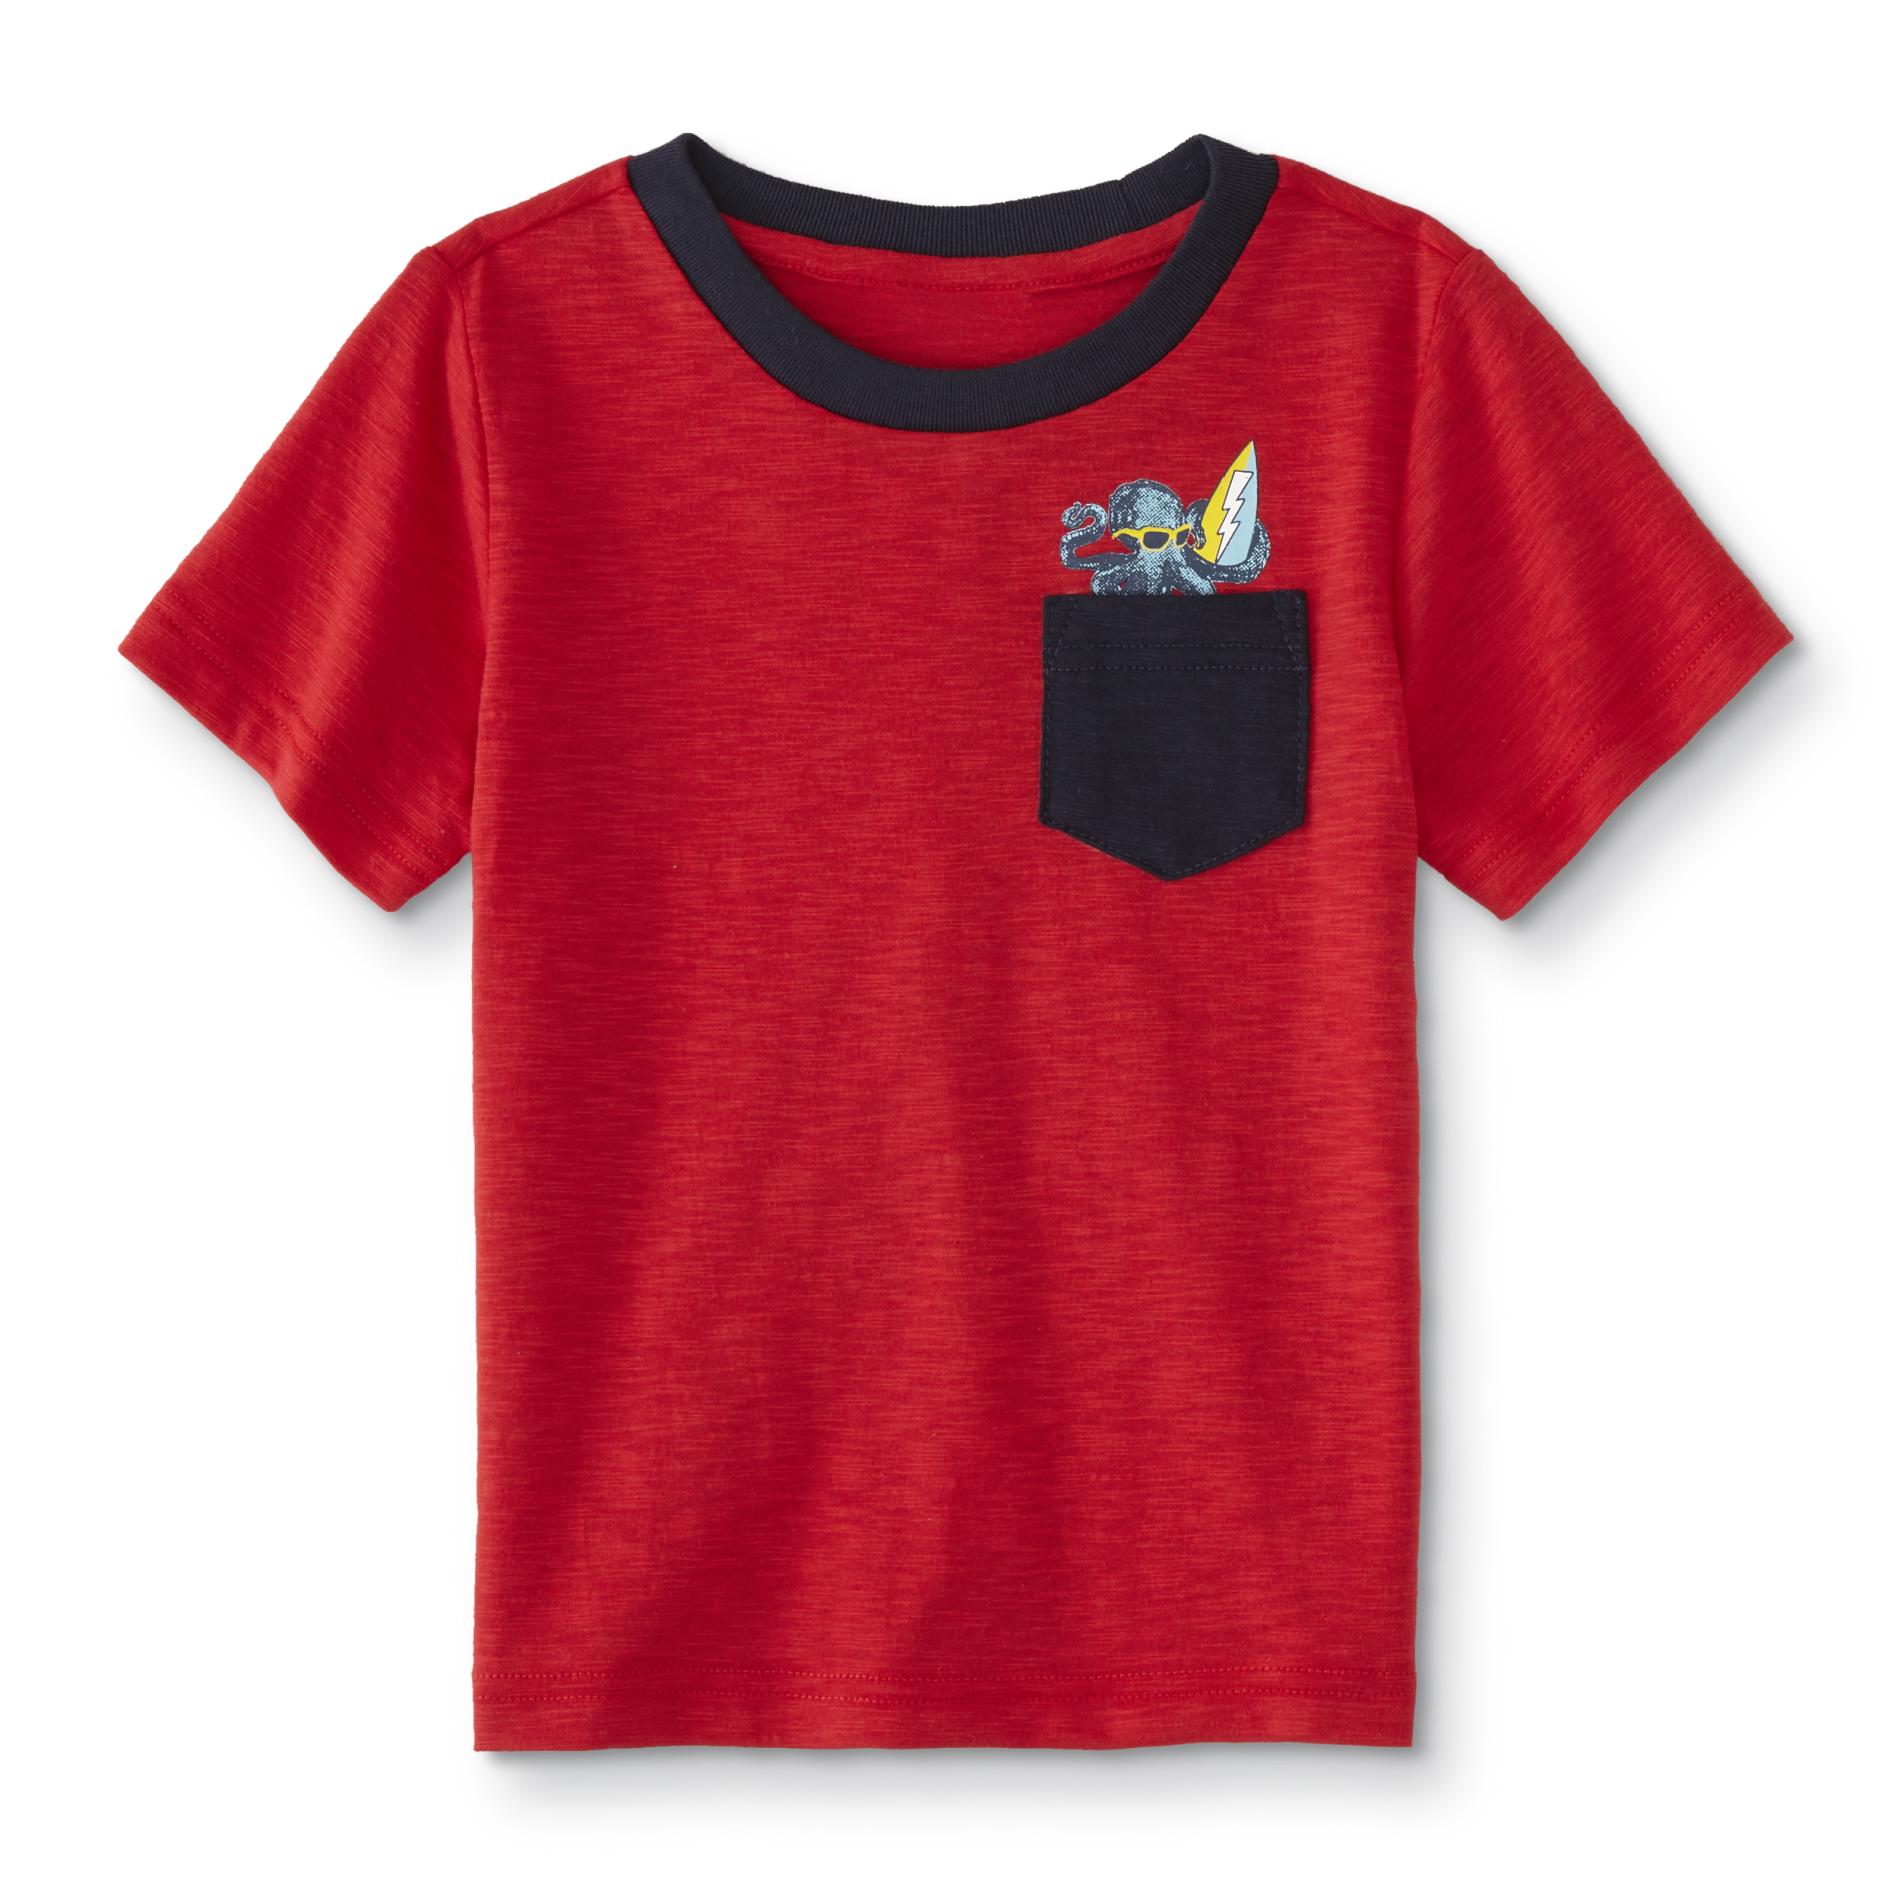 Toughskins Infant & Toddler Boys' Pocket T-Shirt - Octopus/Surfboard